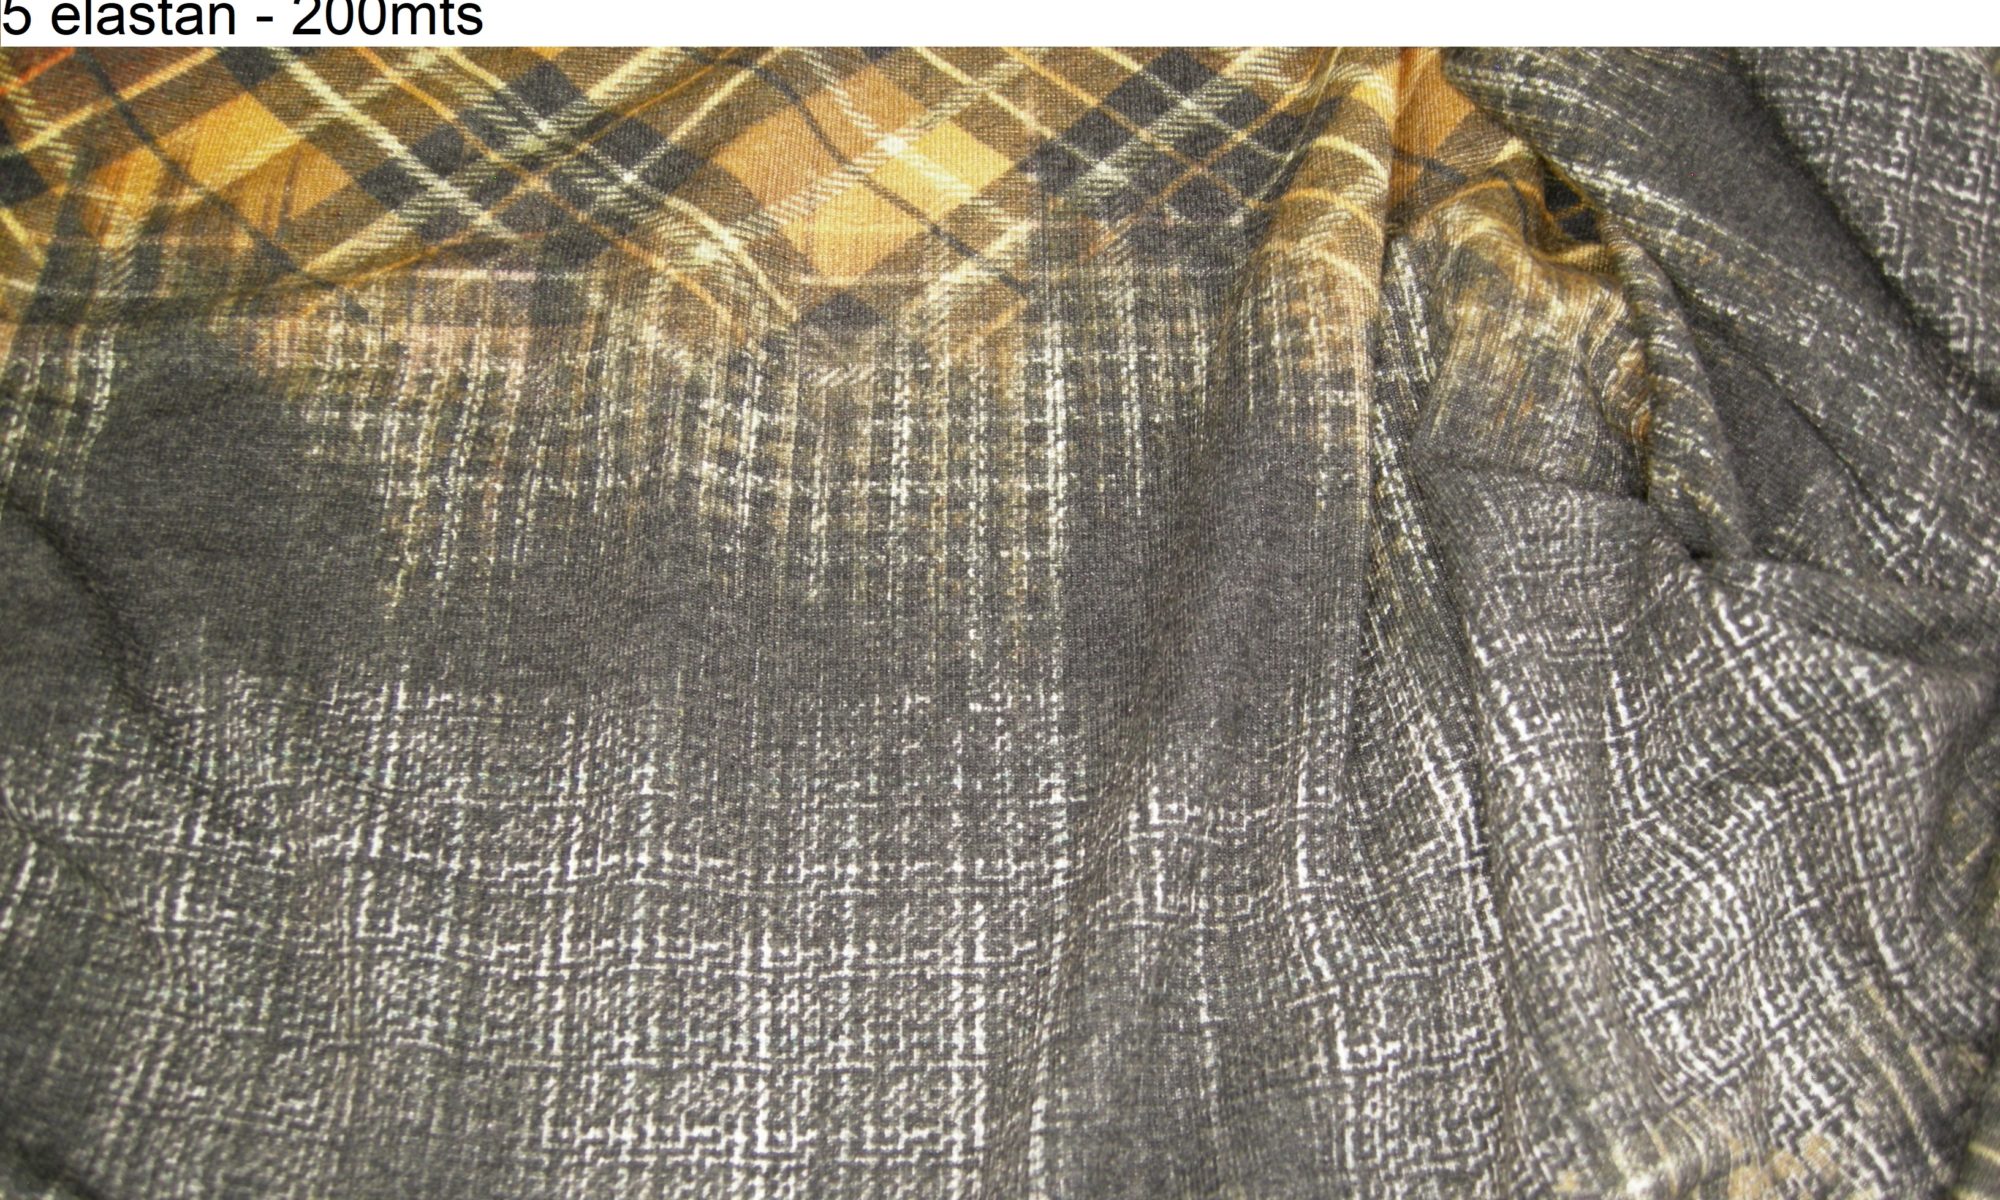 7728 winter print viscose stretch knit jersey dress pants fabric WIDTH cm150 WEIGHT gr390 - gr260 square meter - COMPOSITION 95 viscose 5 elastan - 200mts